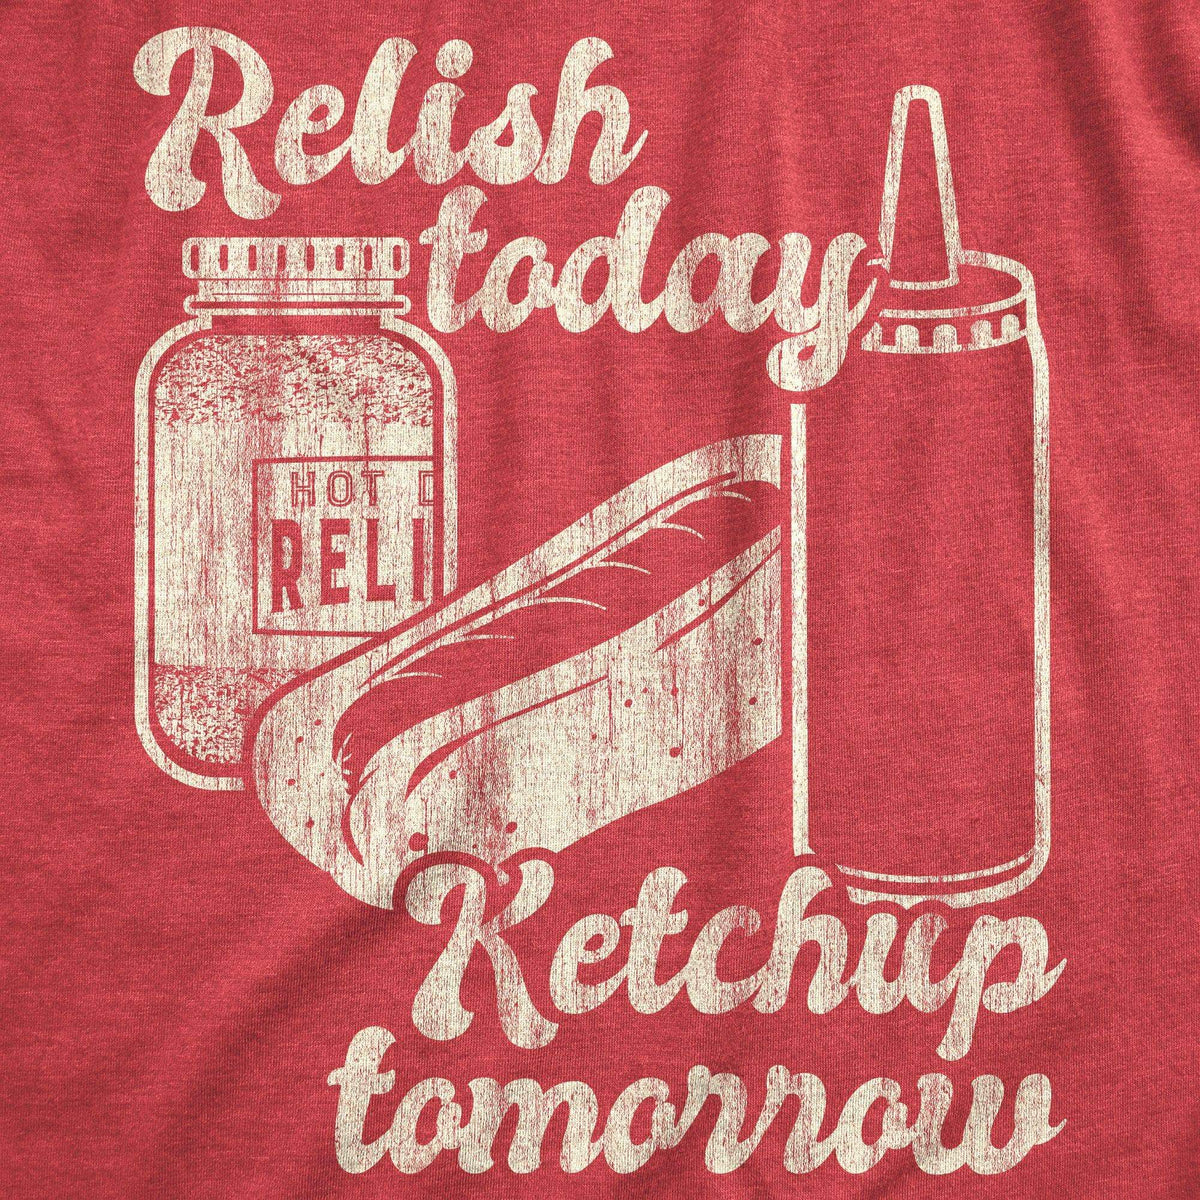 Relish Today Ketchup Tomorrow Women&#39;s Tshirt - Crazy Dog T-Shirts